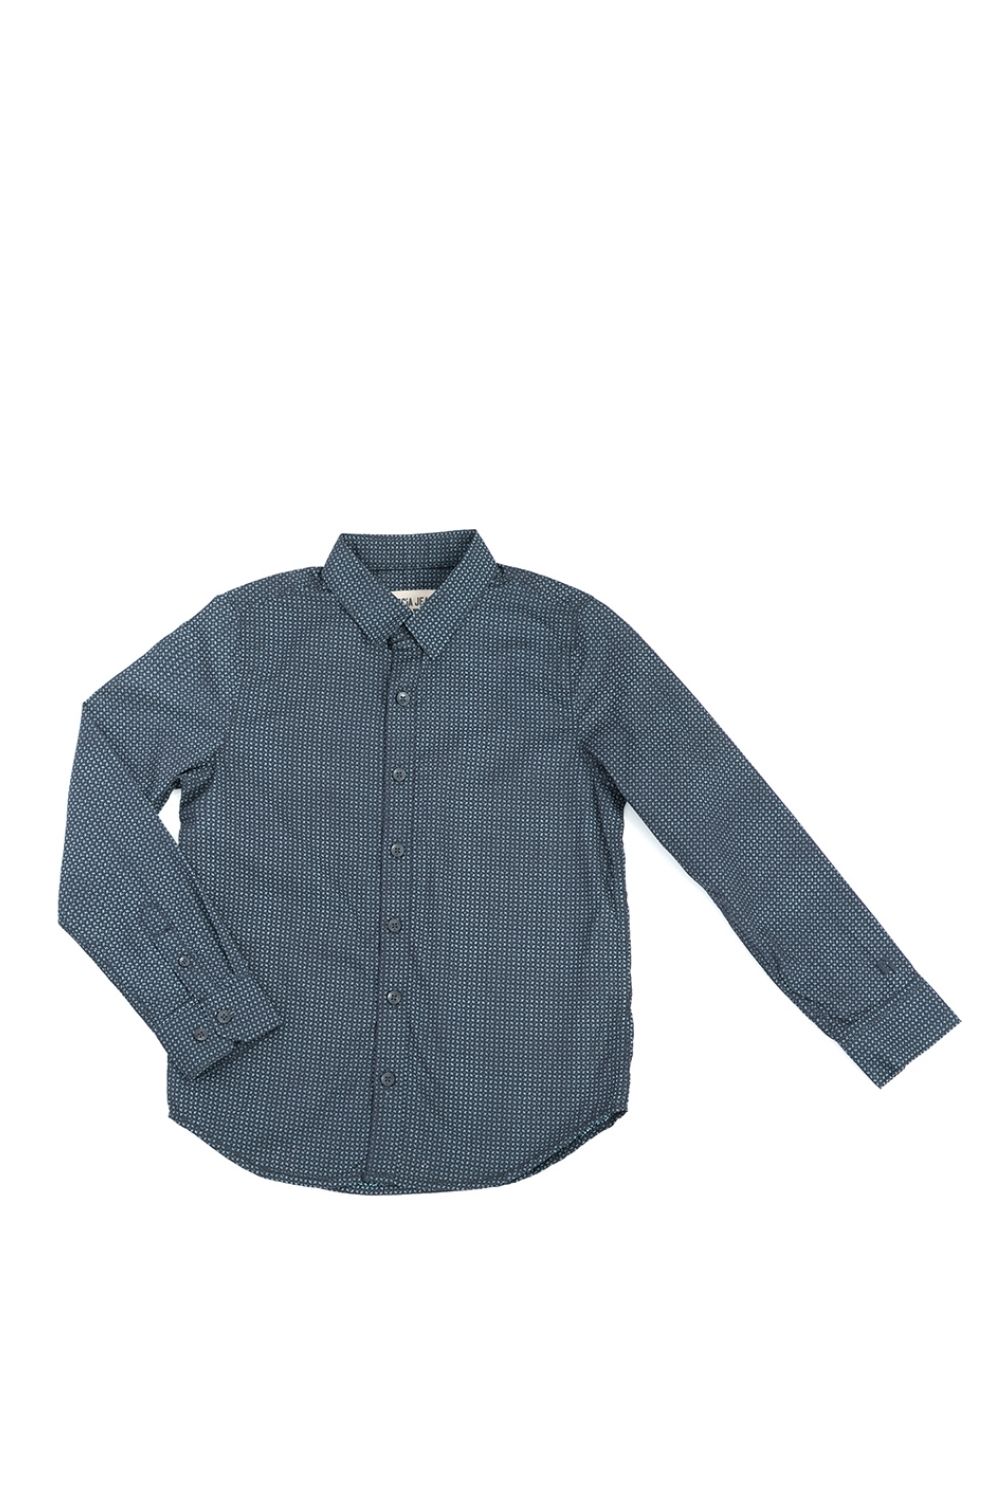 GARCIA JEANS – Παιδικό πουκάμισο GARCIA JEANS γκρι 1524551.0-0084